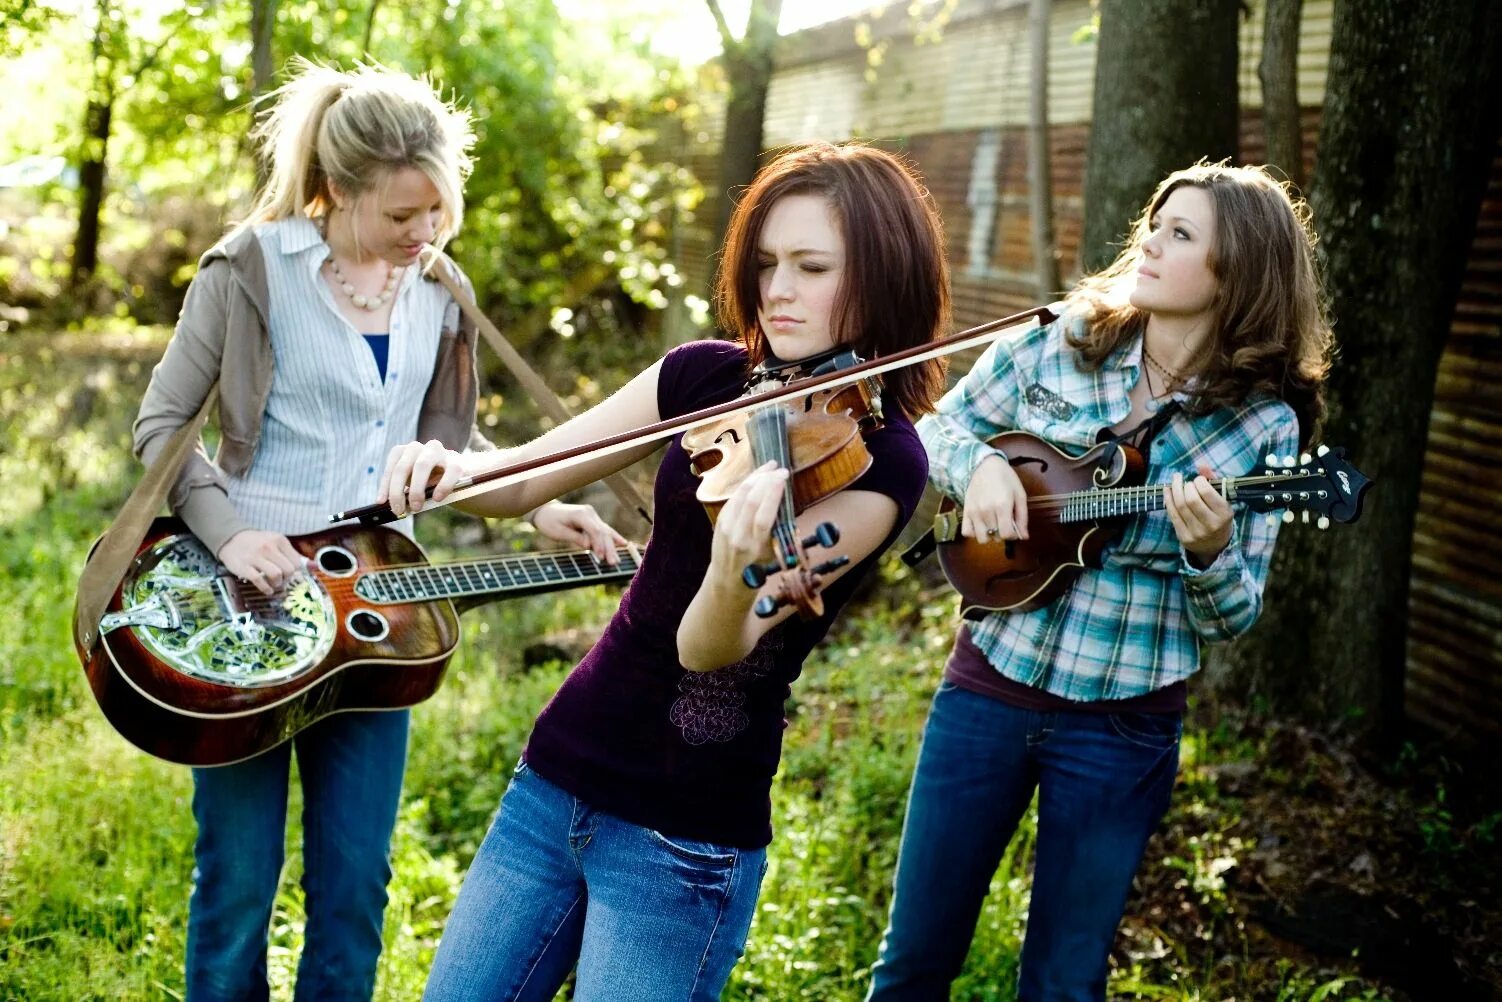 The con sisters. Природный трио. Larkin sisters Band. Картина трио девушек музыканты. Lovell sisters Band.